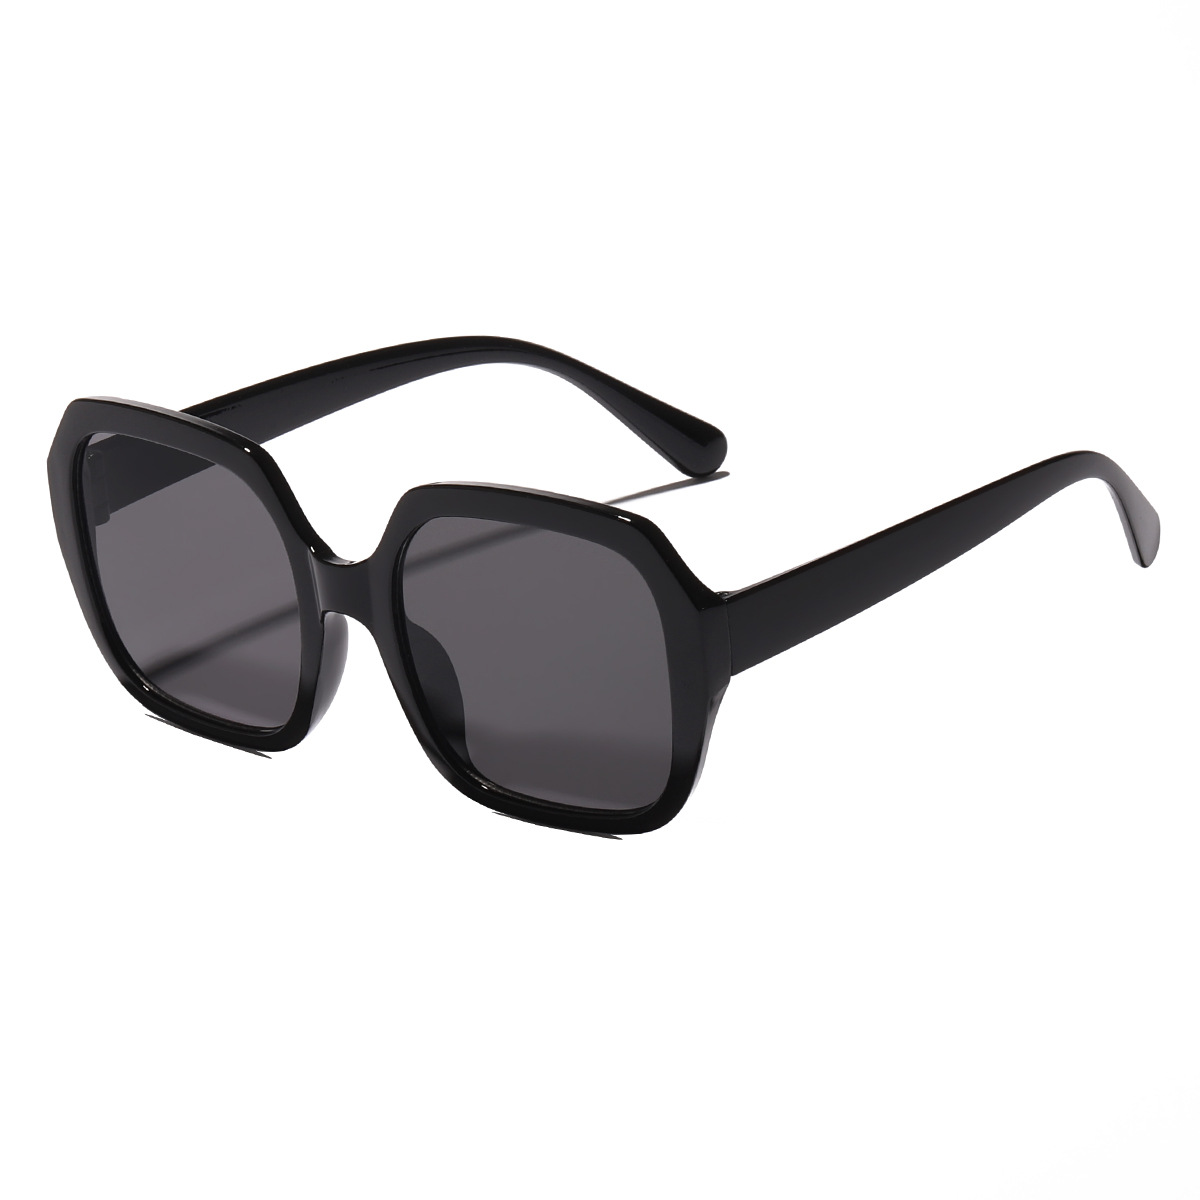 2022 New Large Rim Sunglasses Retro Artistic to Make Big Face Thin-Looked Xiaohongshu Same Style Fashion Plain Sunglasses